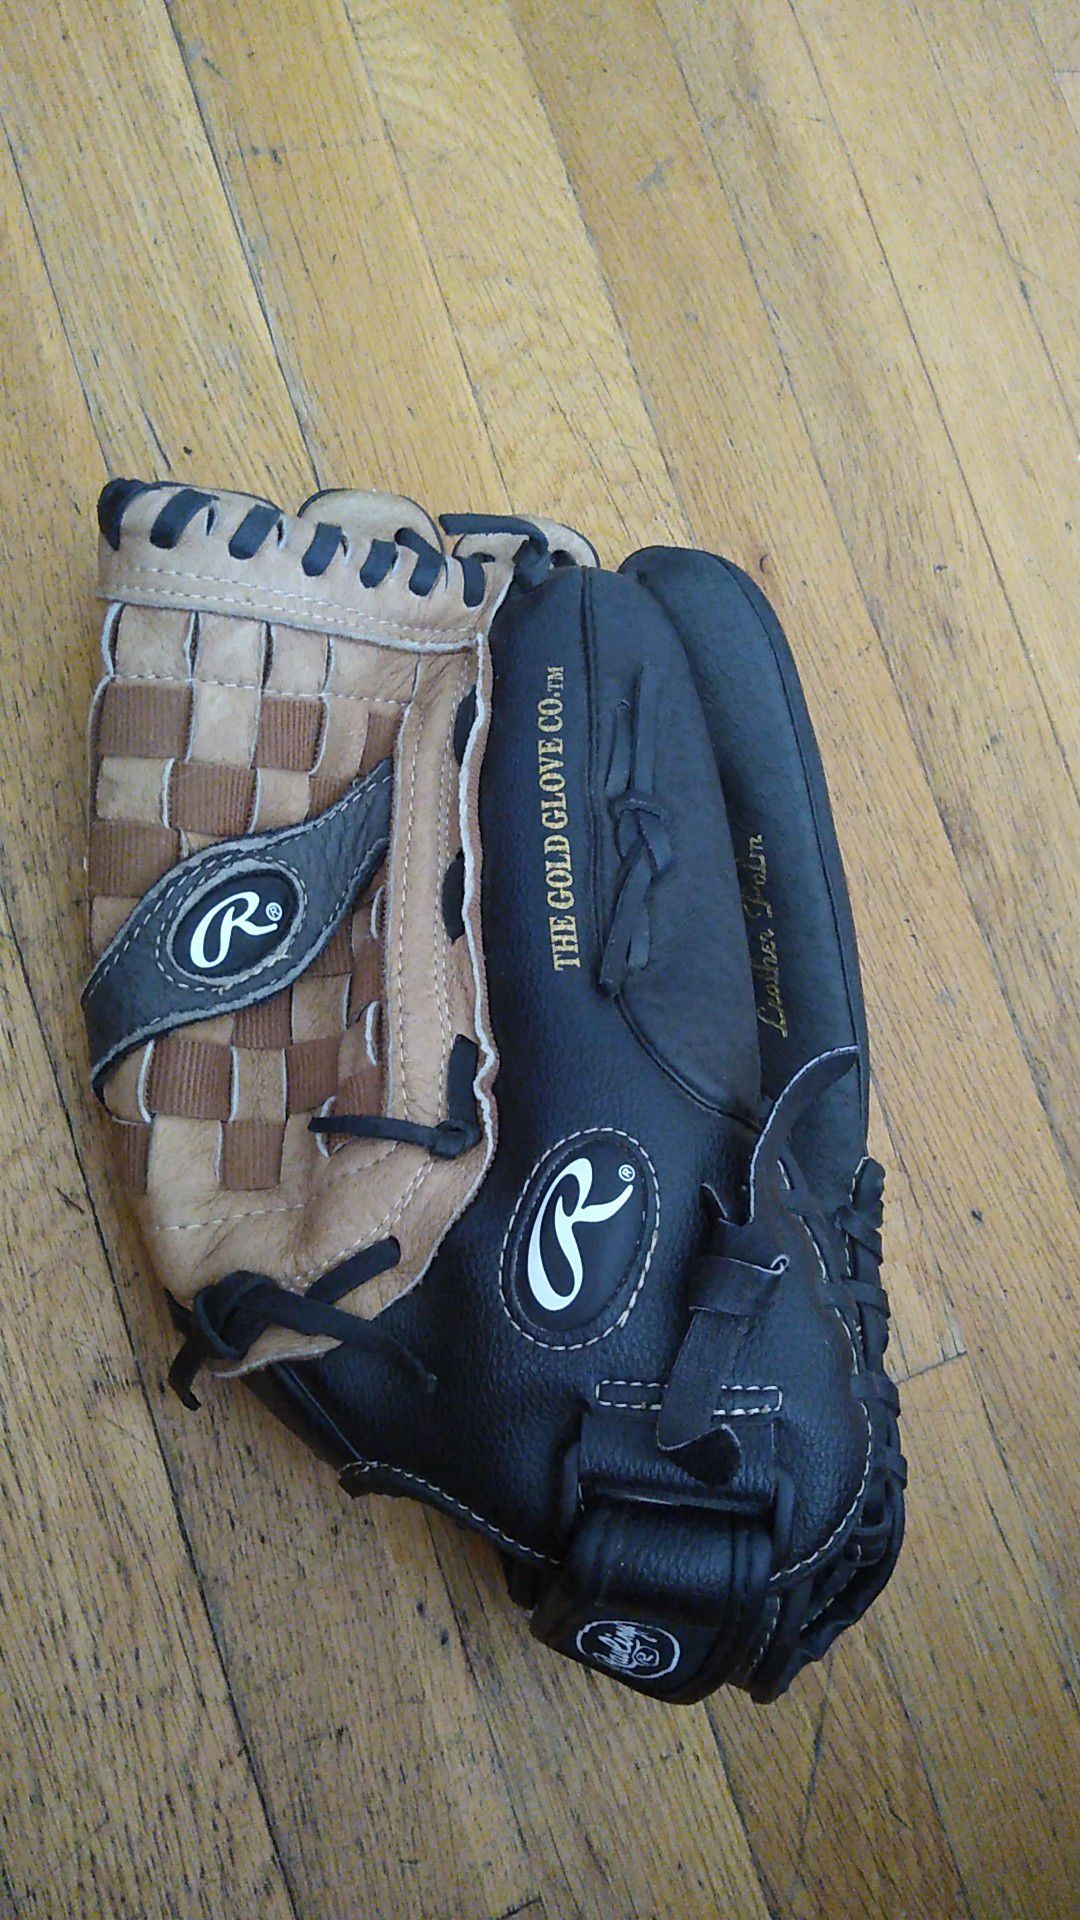 Rawlings 14-Inch Softball Glove Mitt